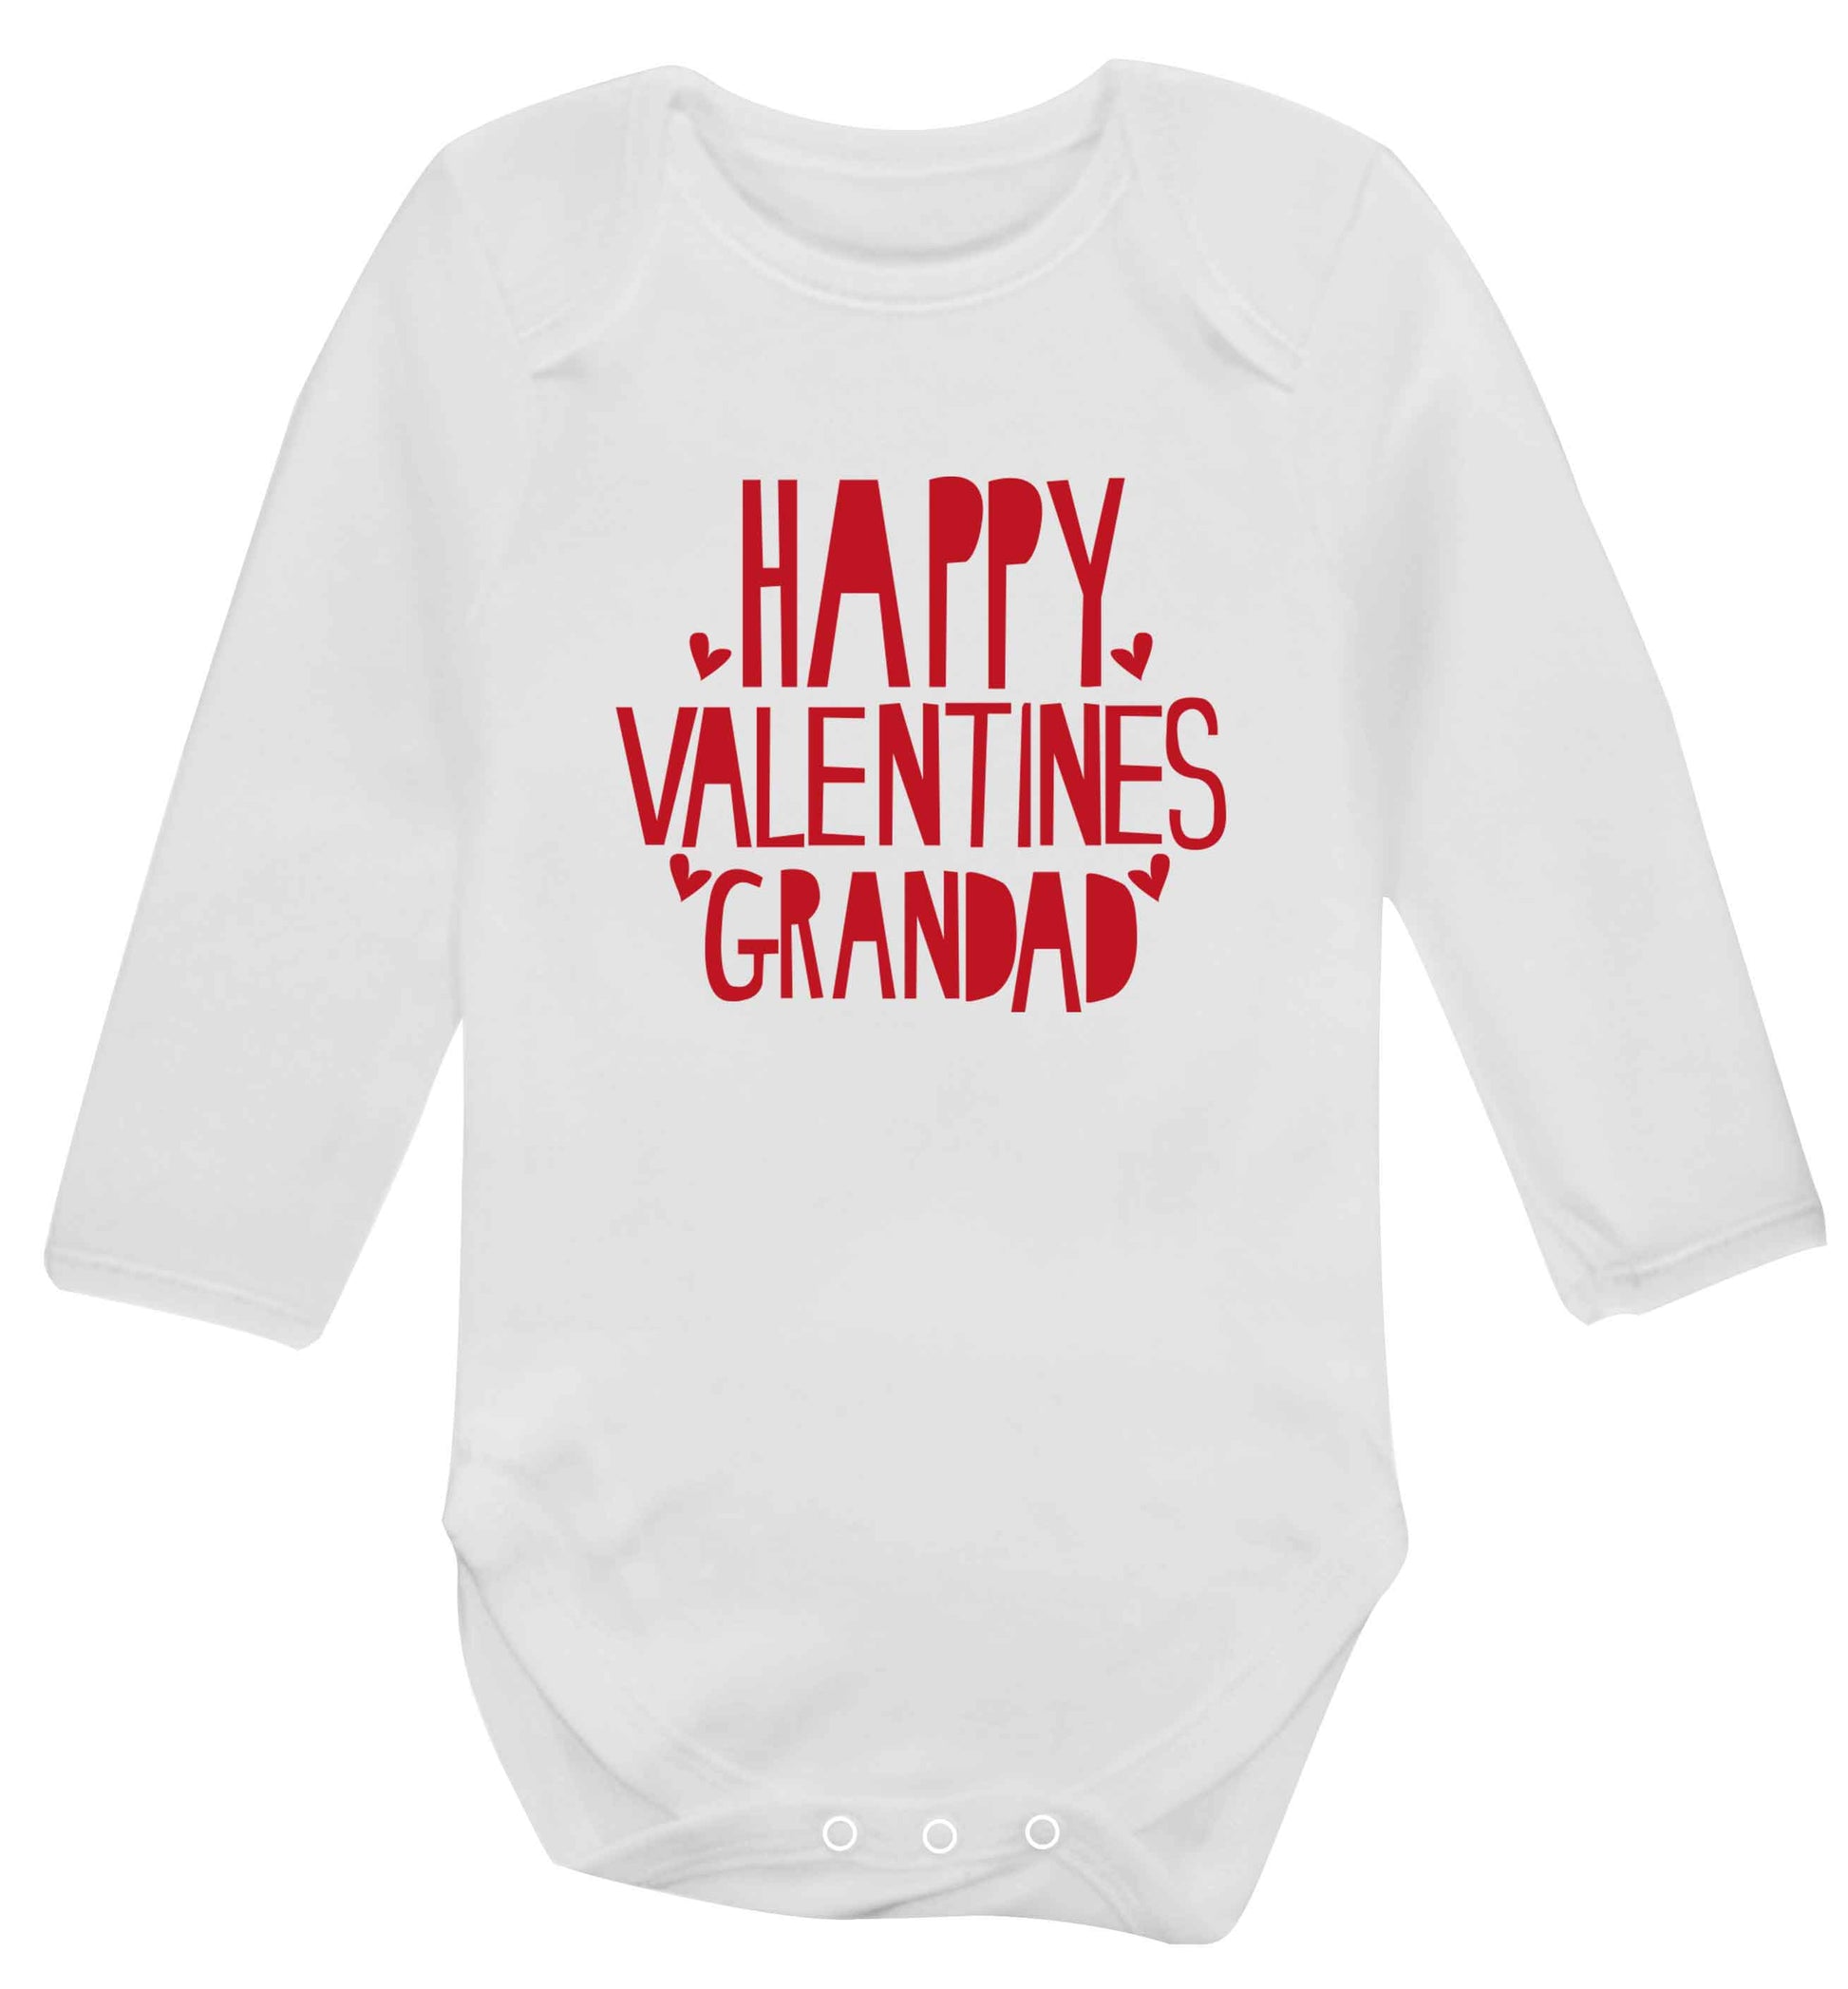 Happy valentines grandad baby vest long sleeved white 6-12 months